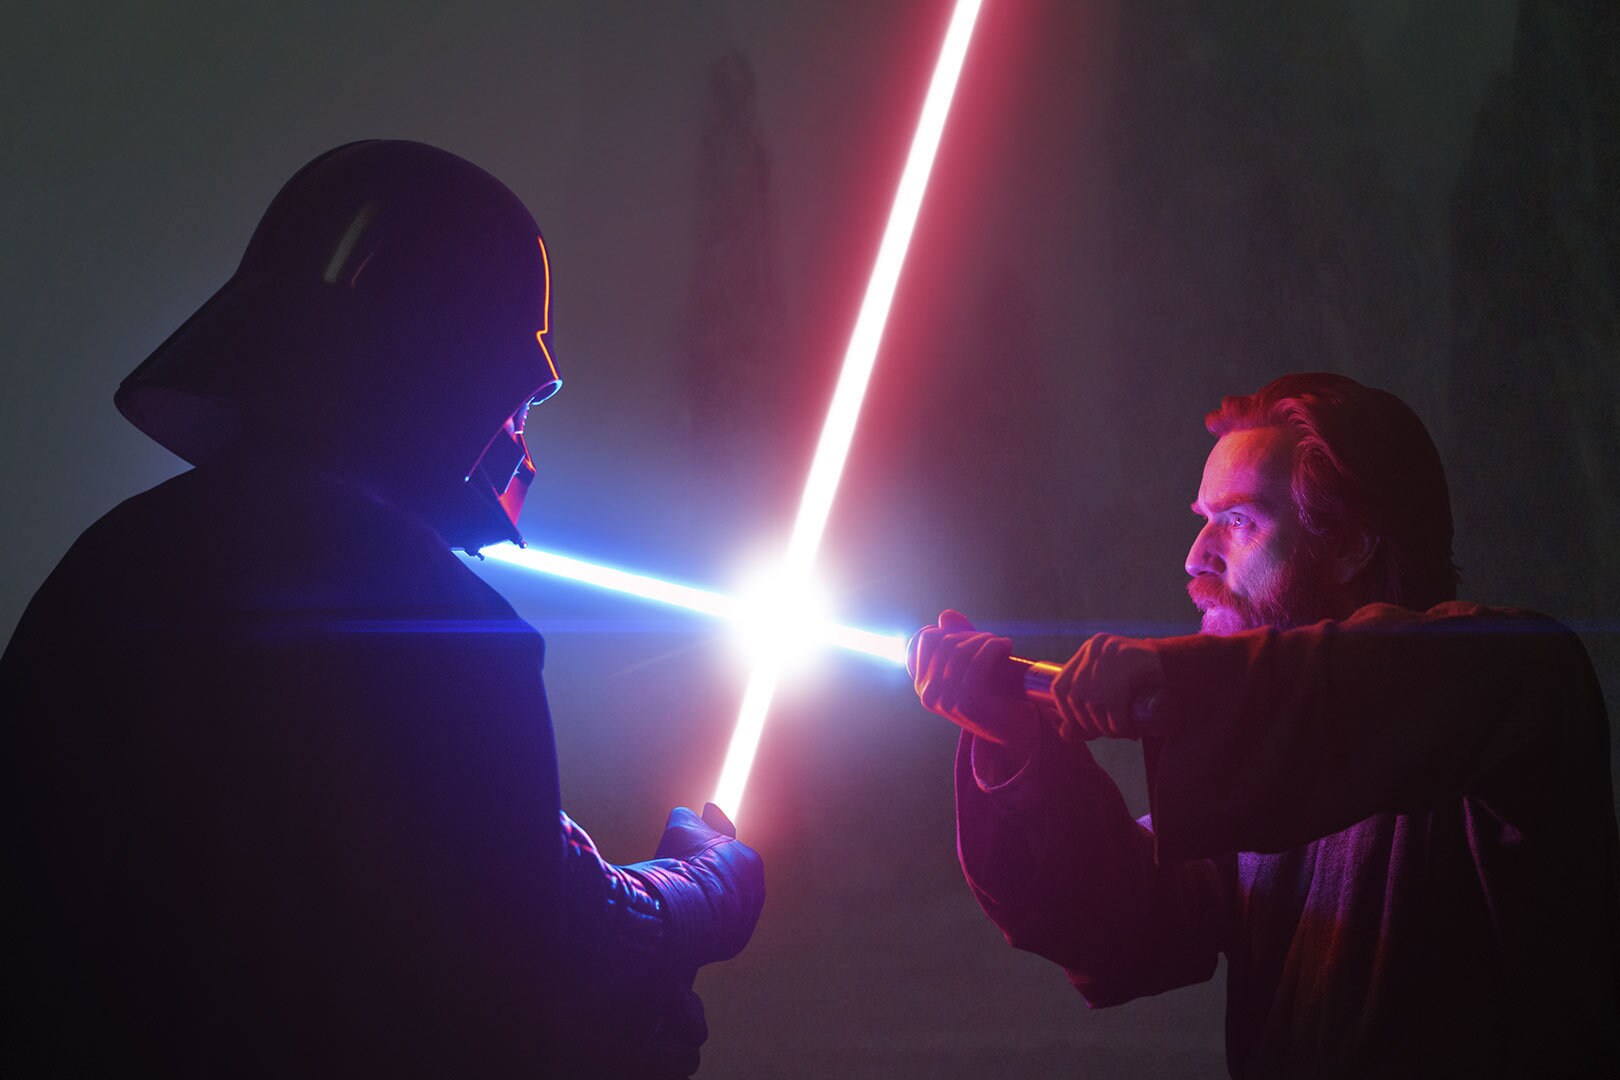 Darth Vader and Obi-Wan Kenobi dueling on a barren moon